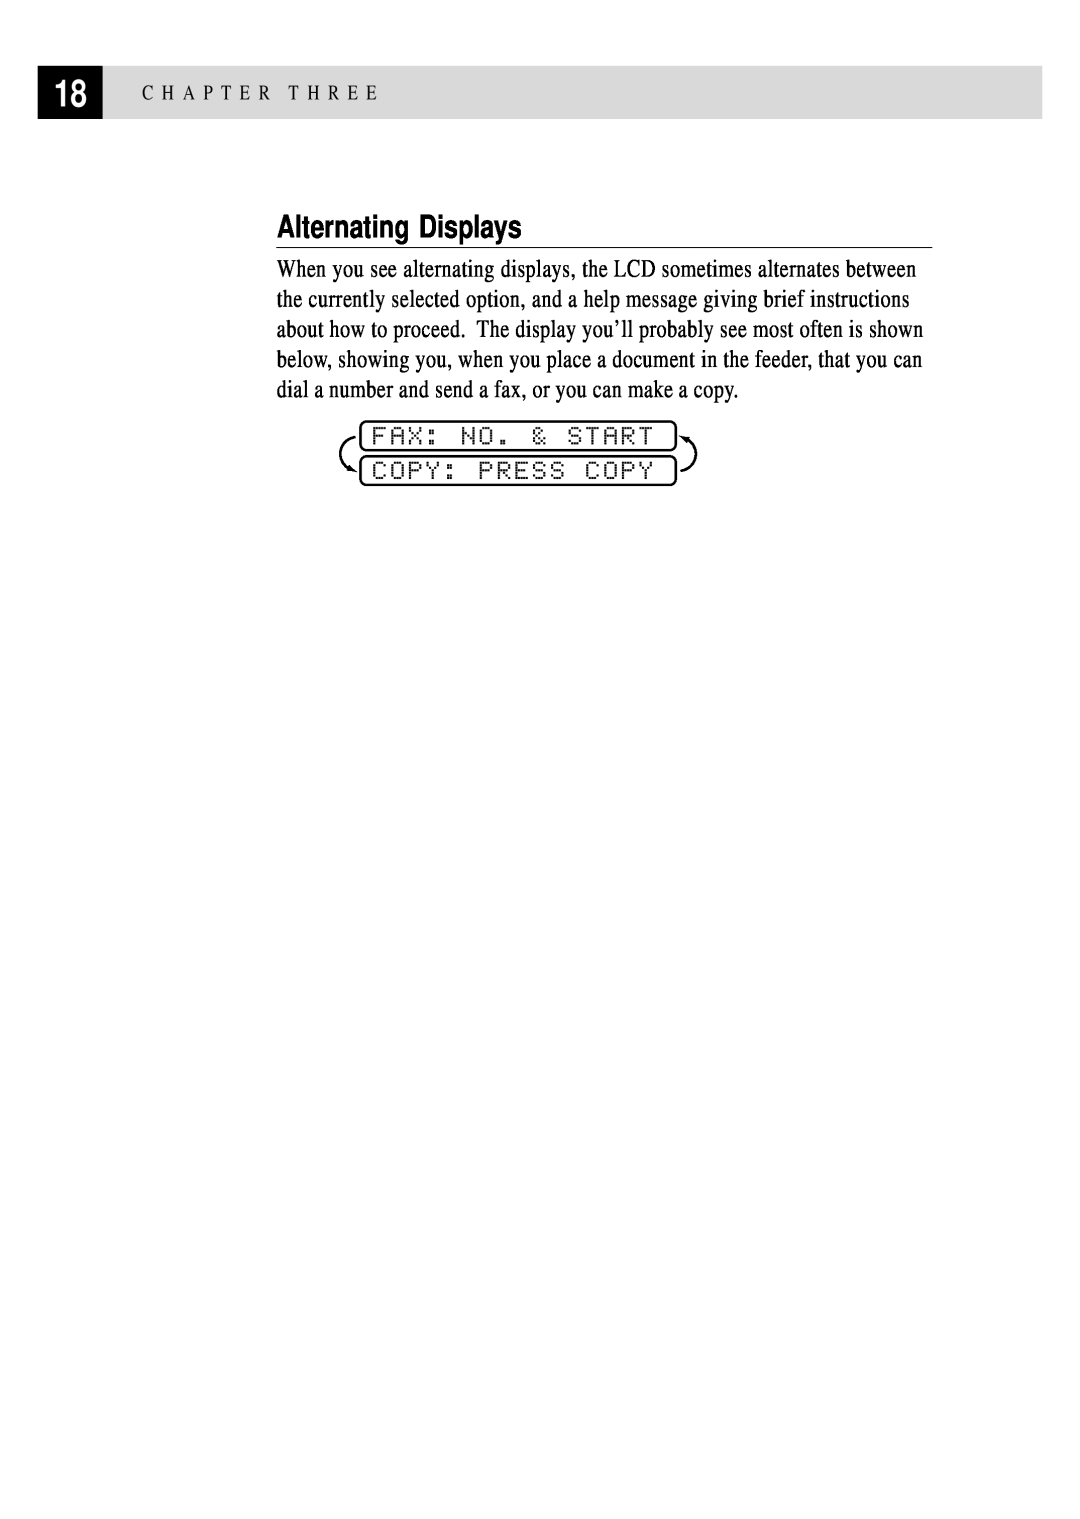 Brother FAX 255 owner manual Alternating Displays, Fax No. & Start Copy Press Copy 